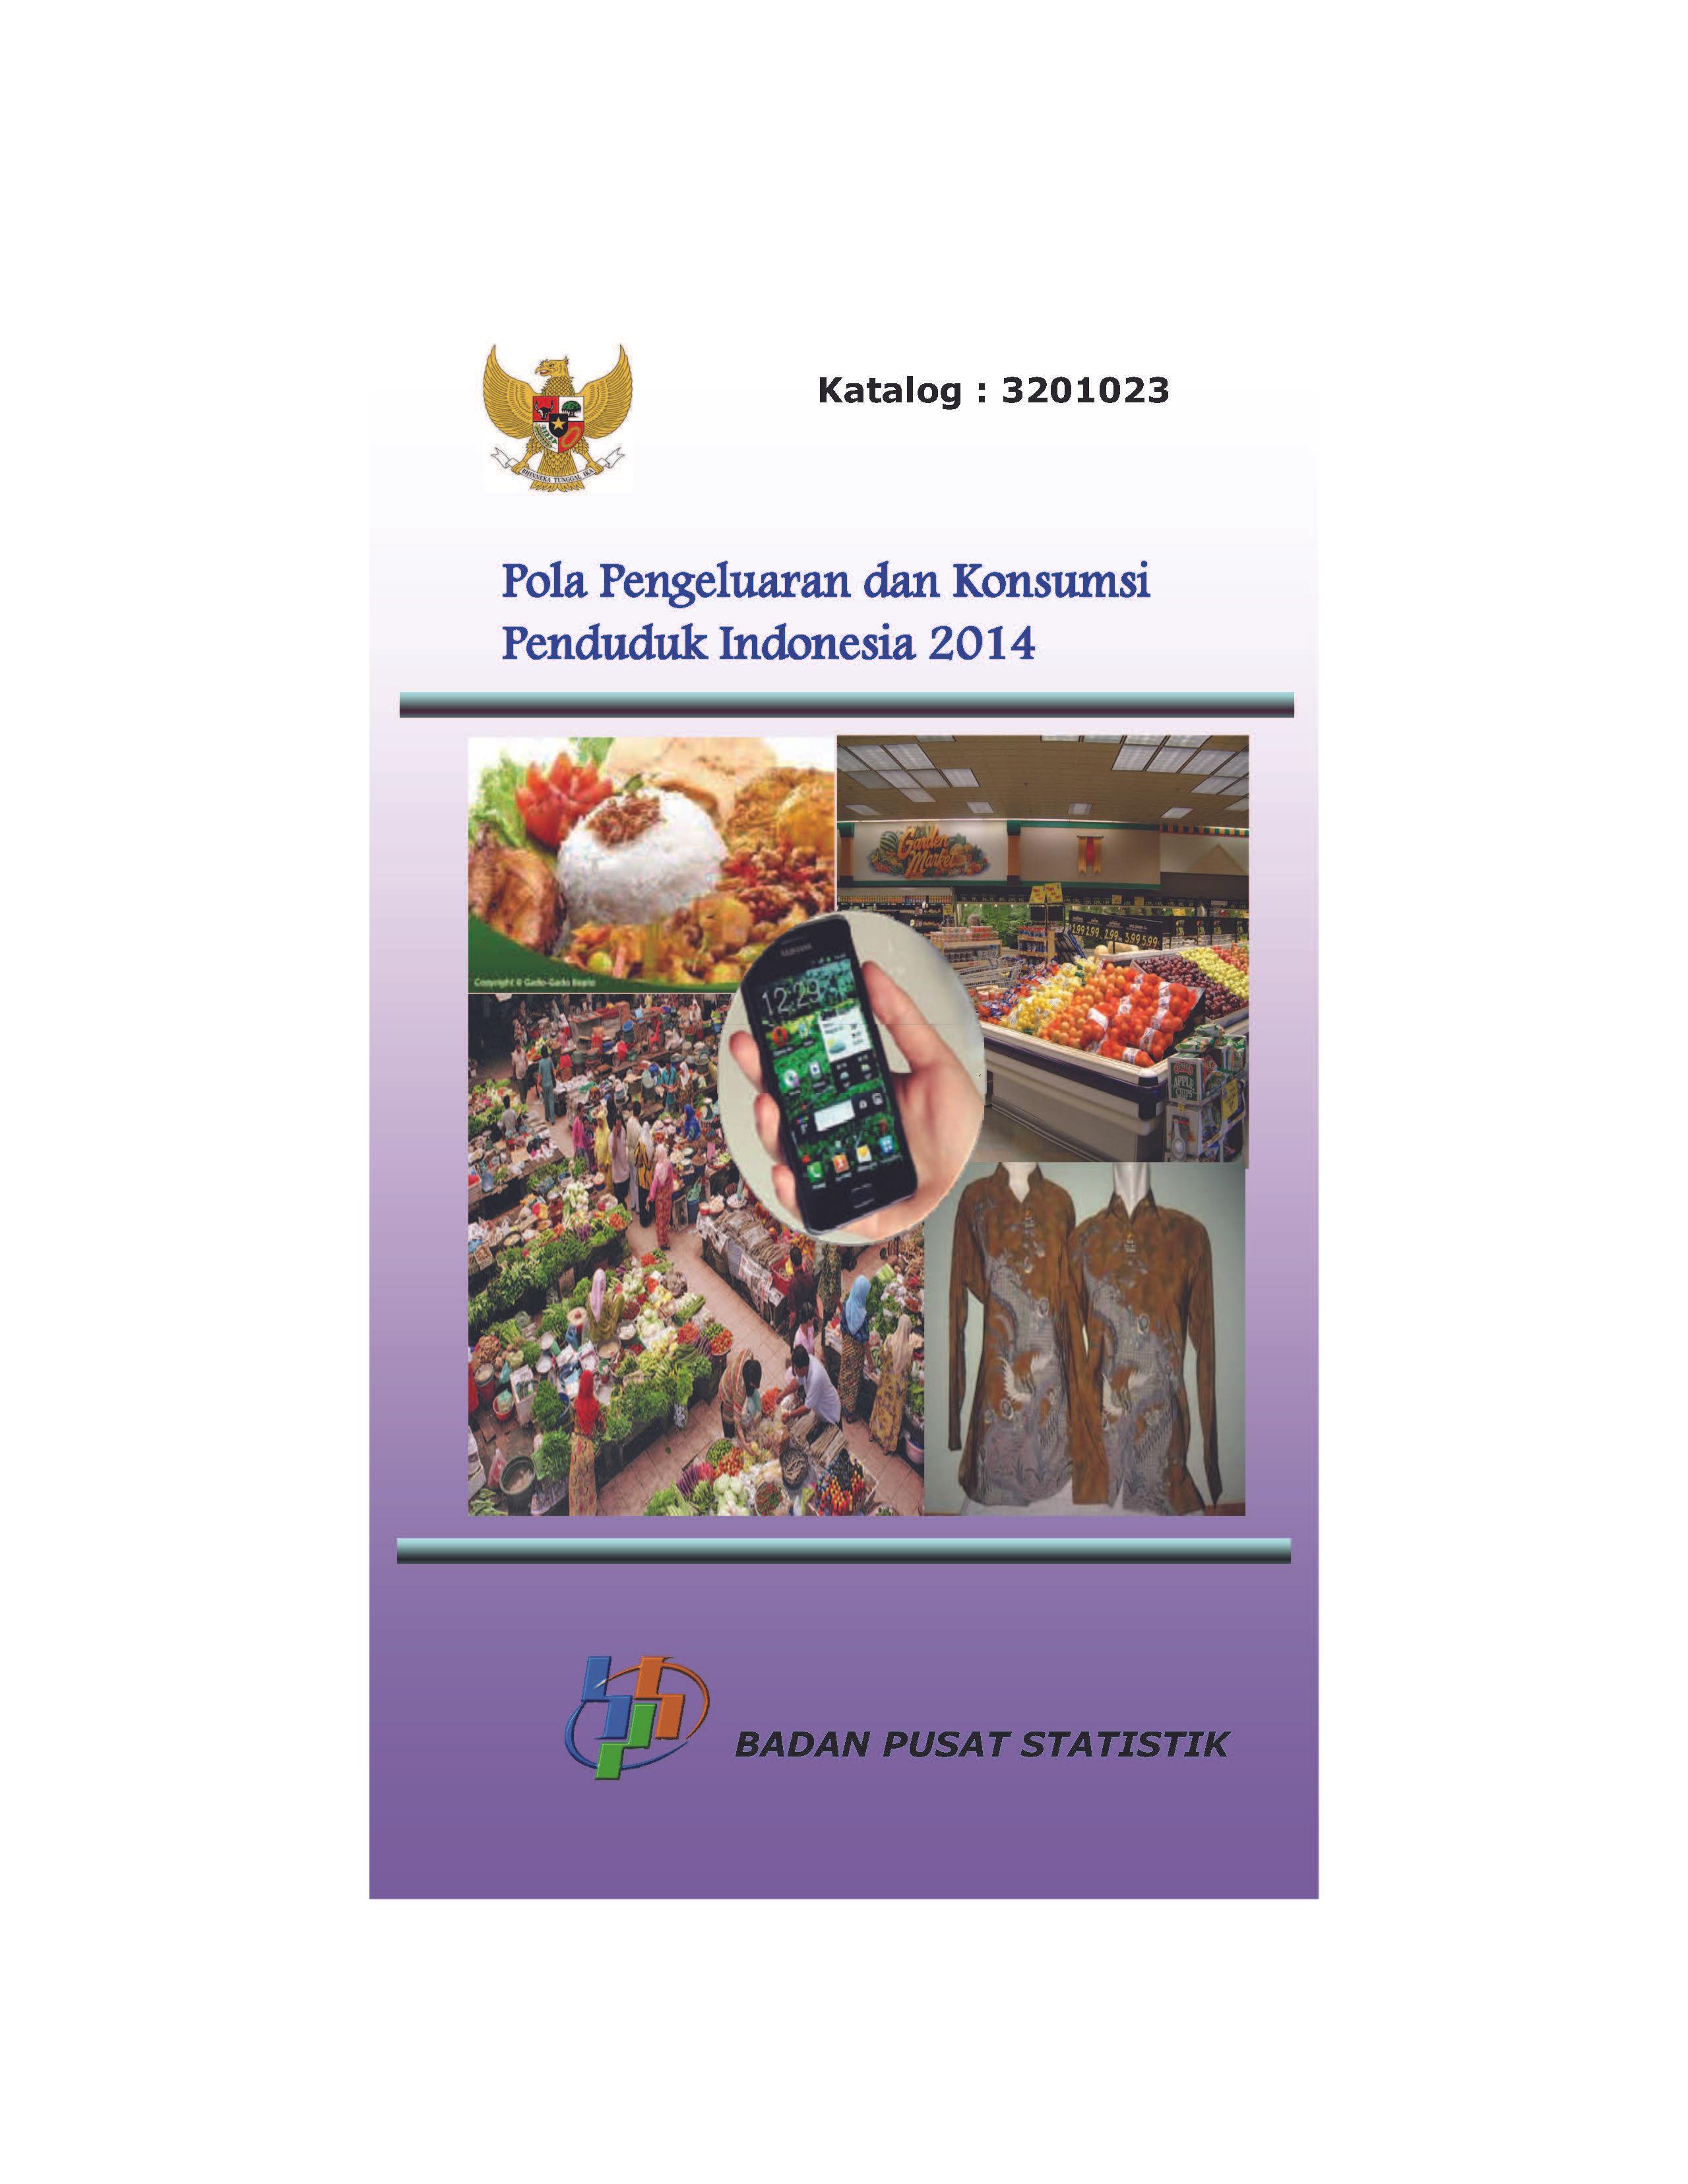 Pola Pengeluaran dan Konsumsi Penduduk Indonesia 2014